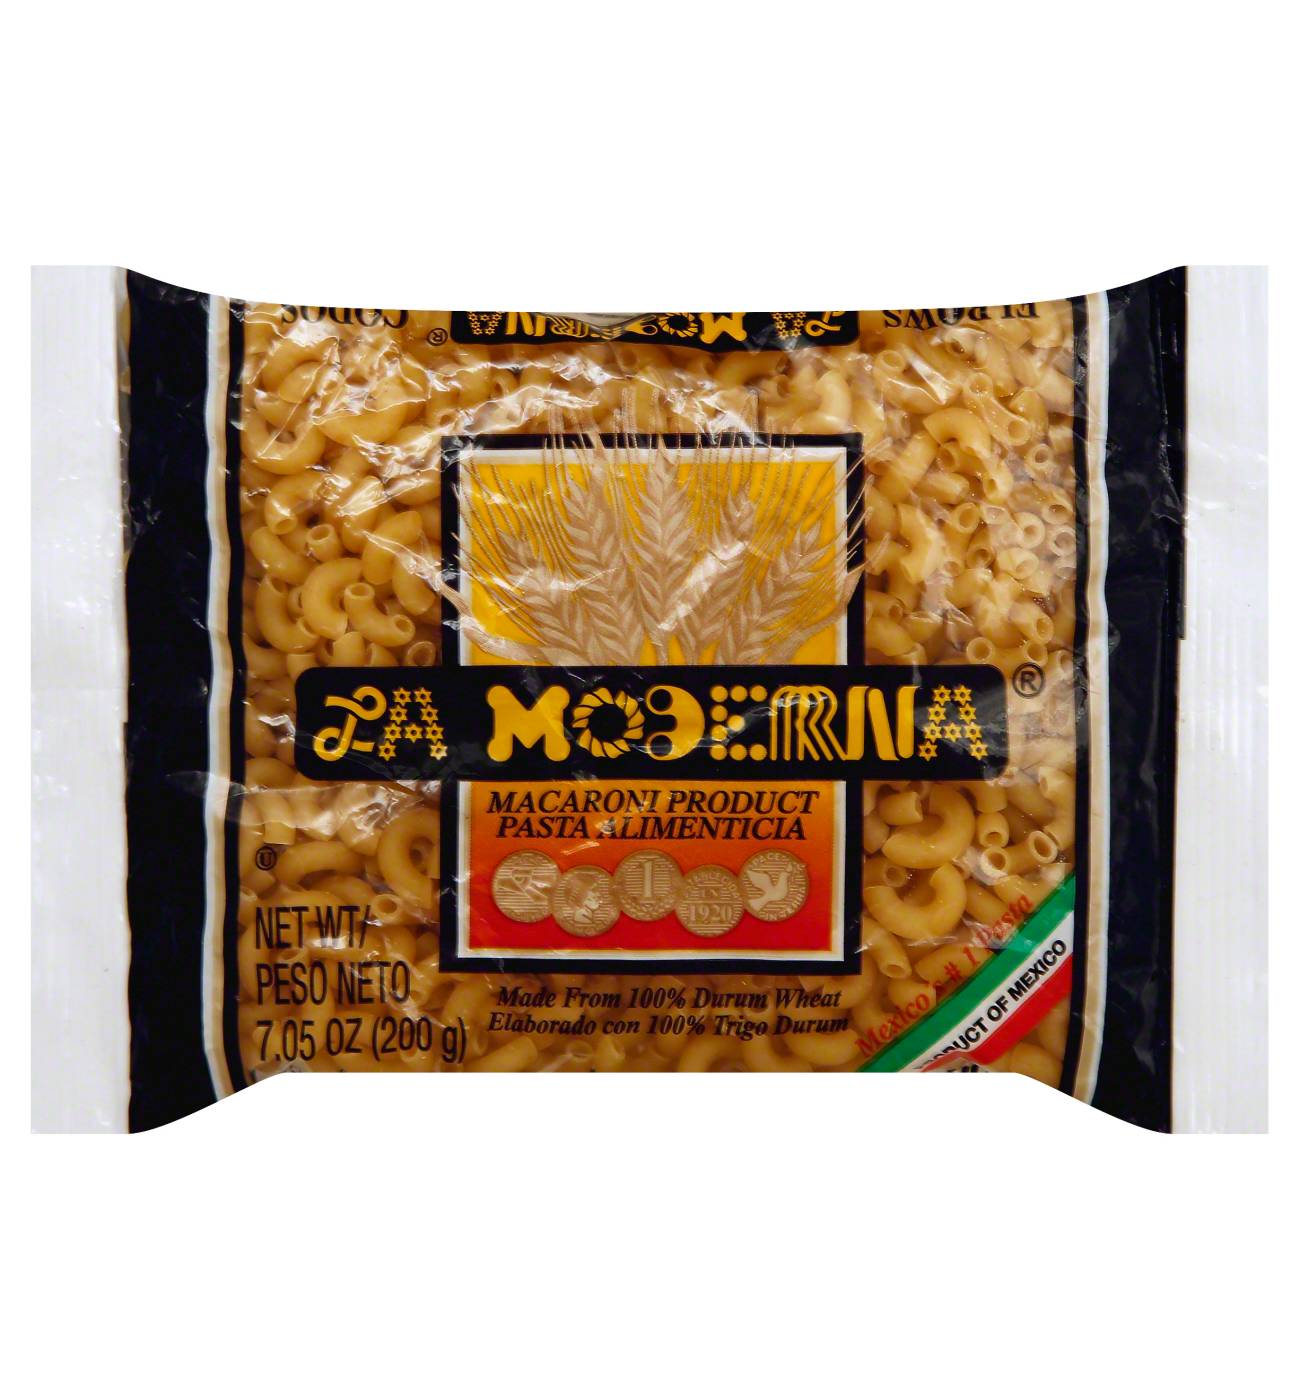 La Moderna Elbow Macaroni Pasta; image 2 of 2